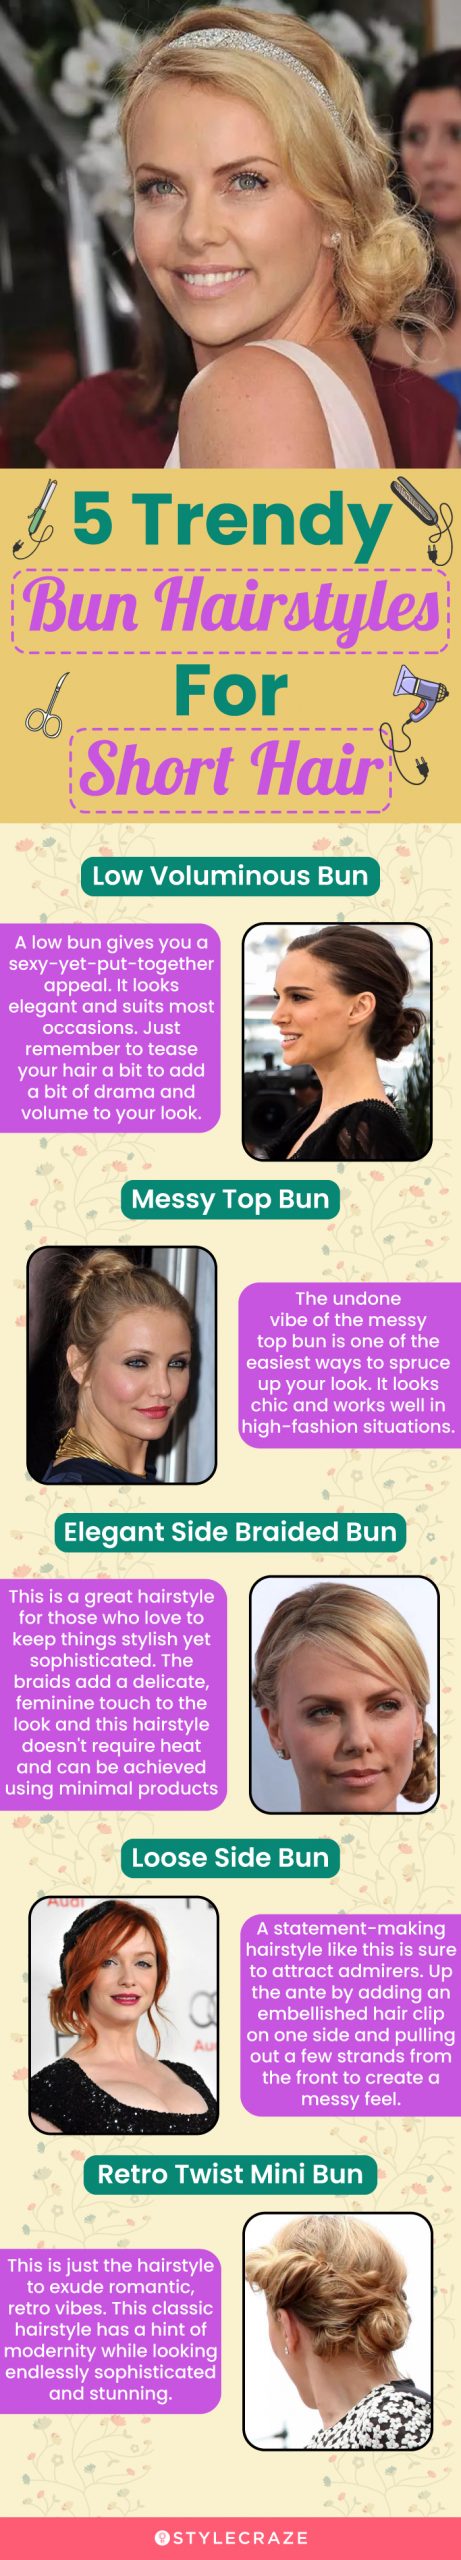 5 trendy bun hairstyles for short hair (infographic)